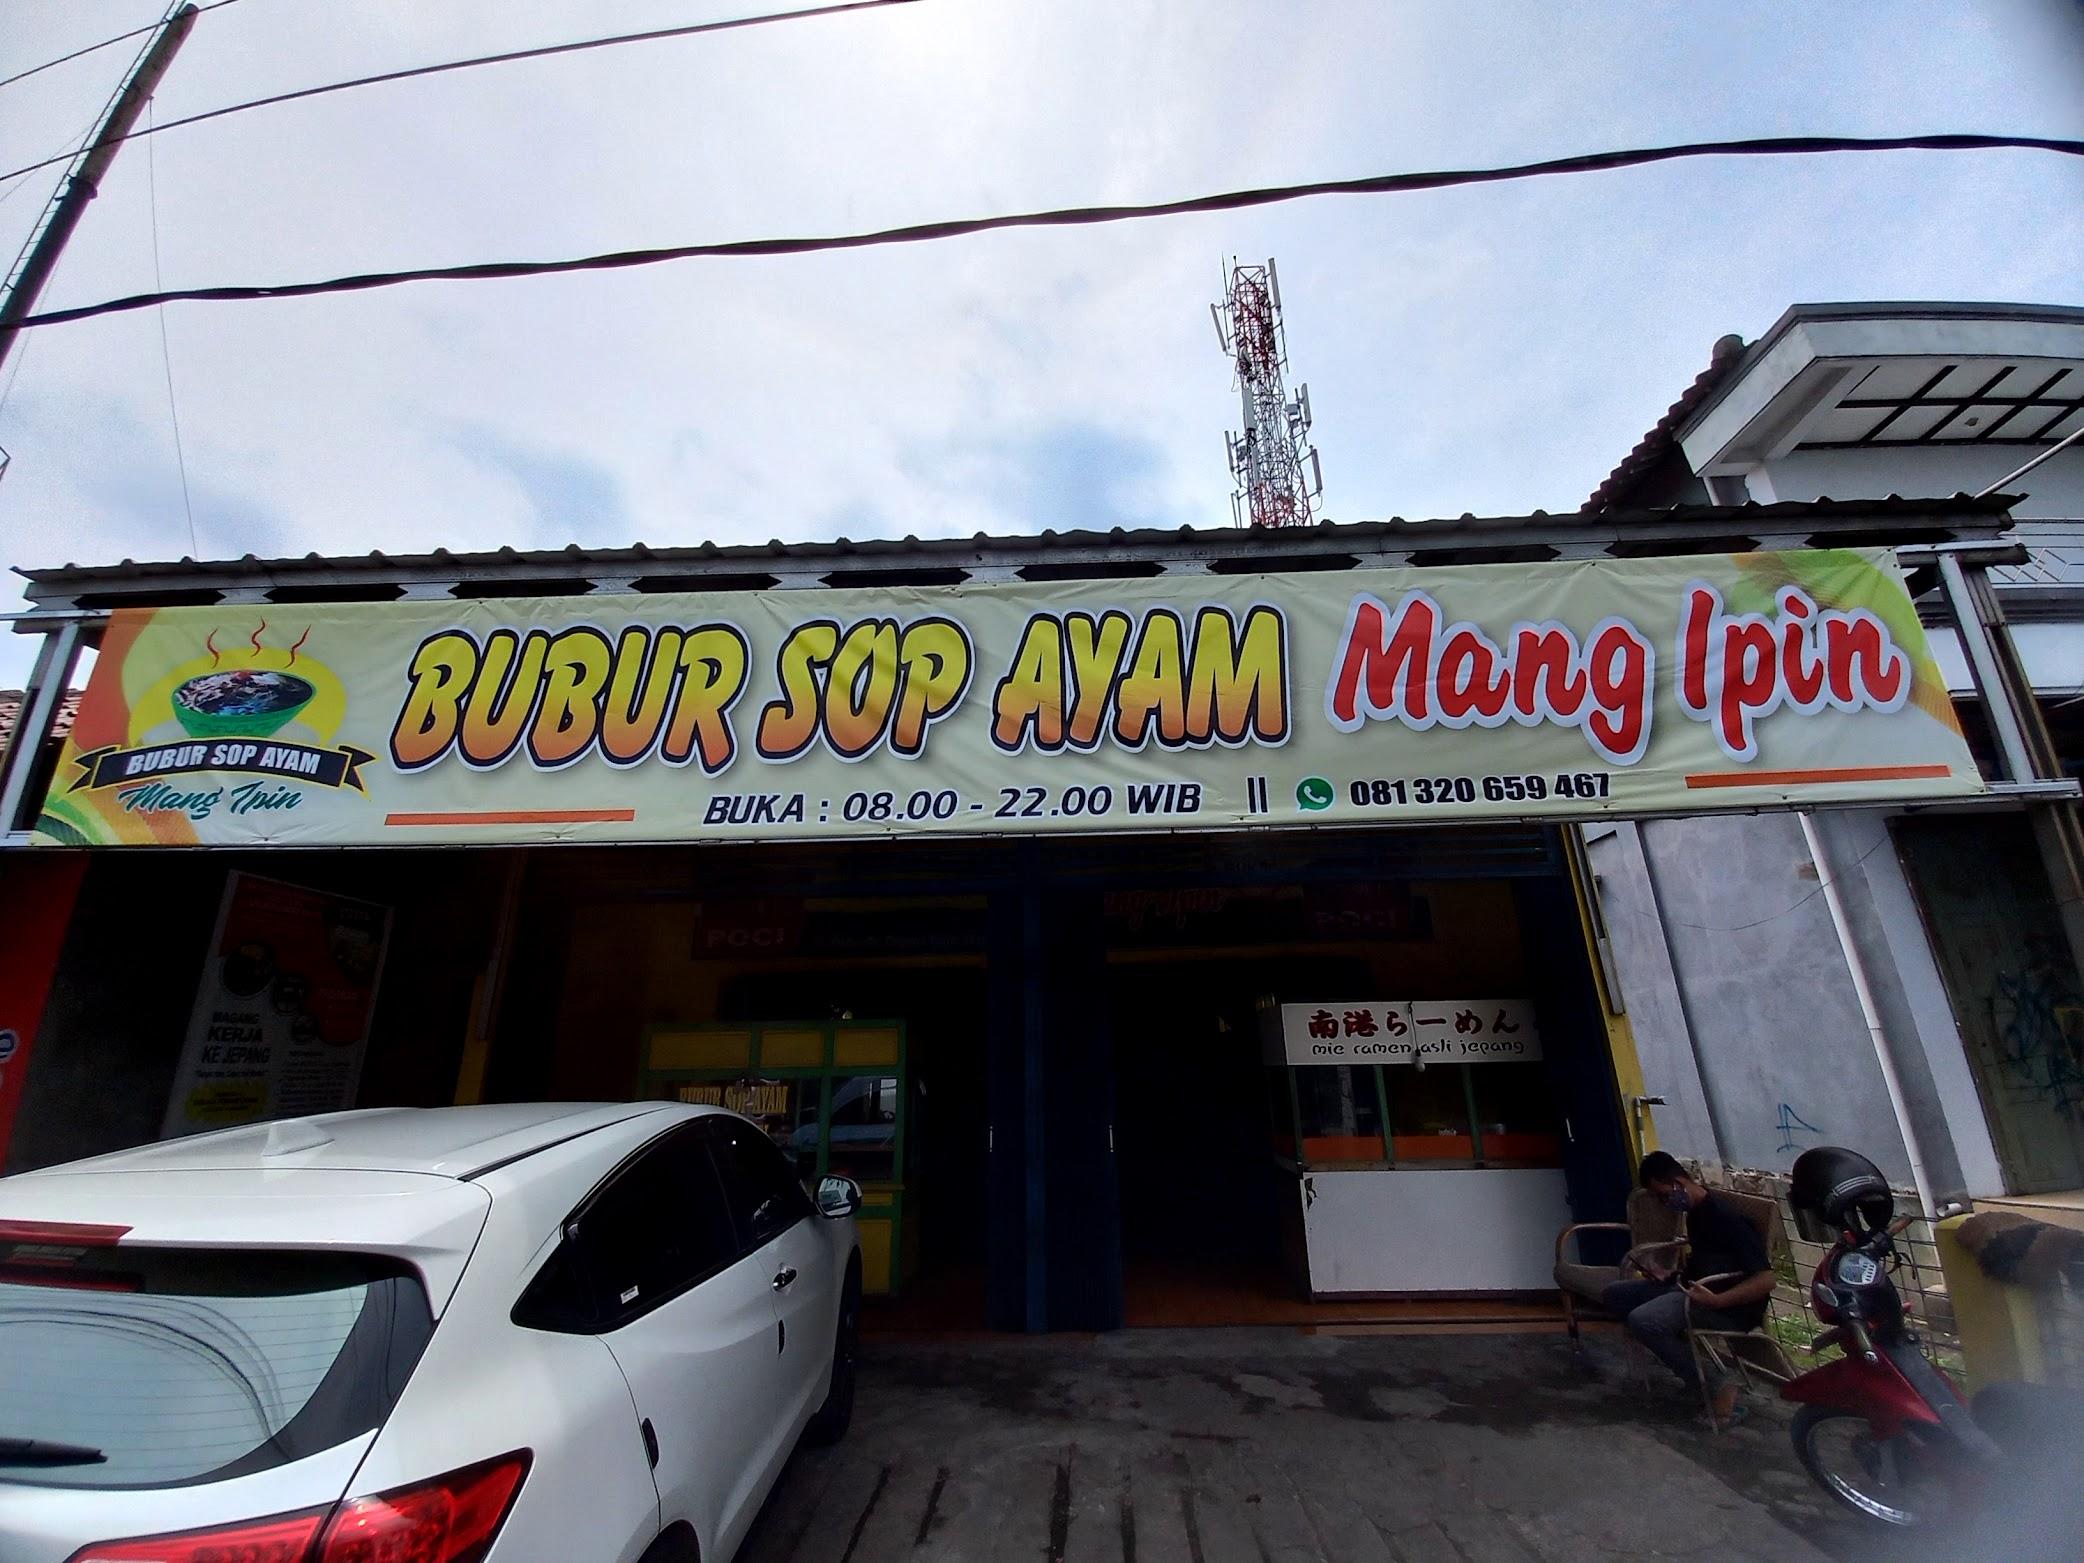 Bubur Ayam Mang Ipin review